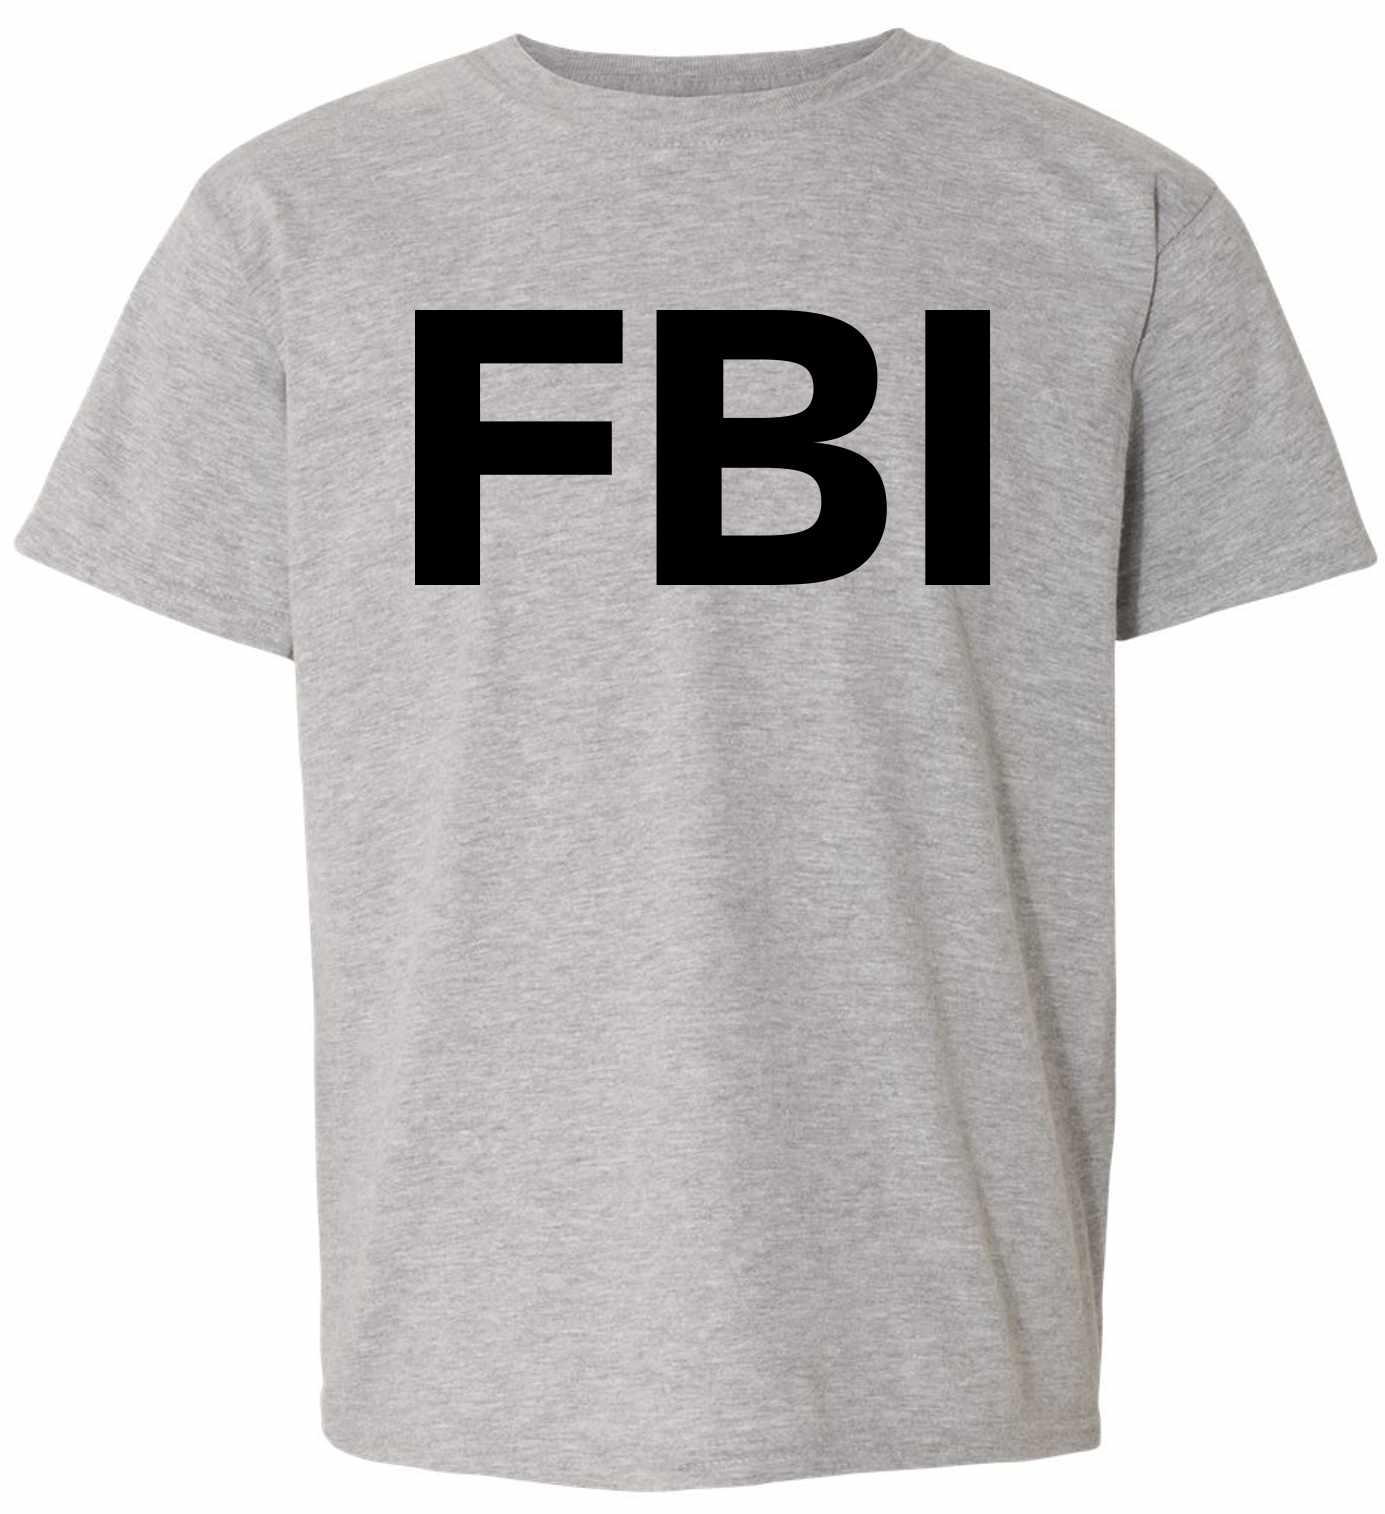 FBI on Kids T-Shirt (#402-201)